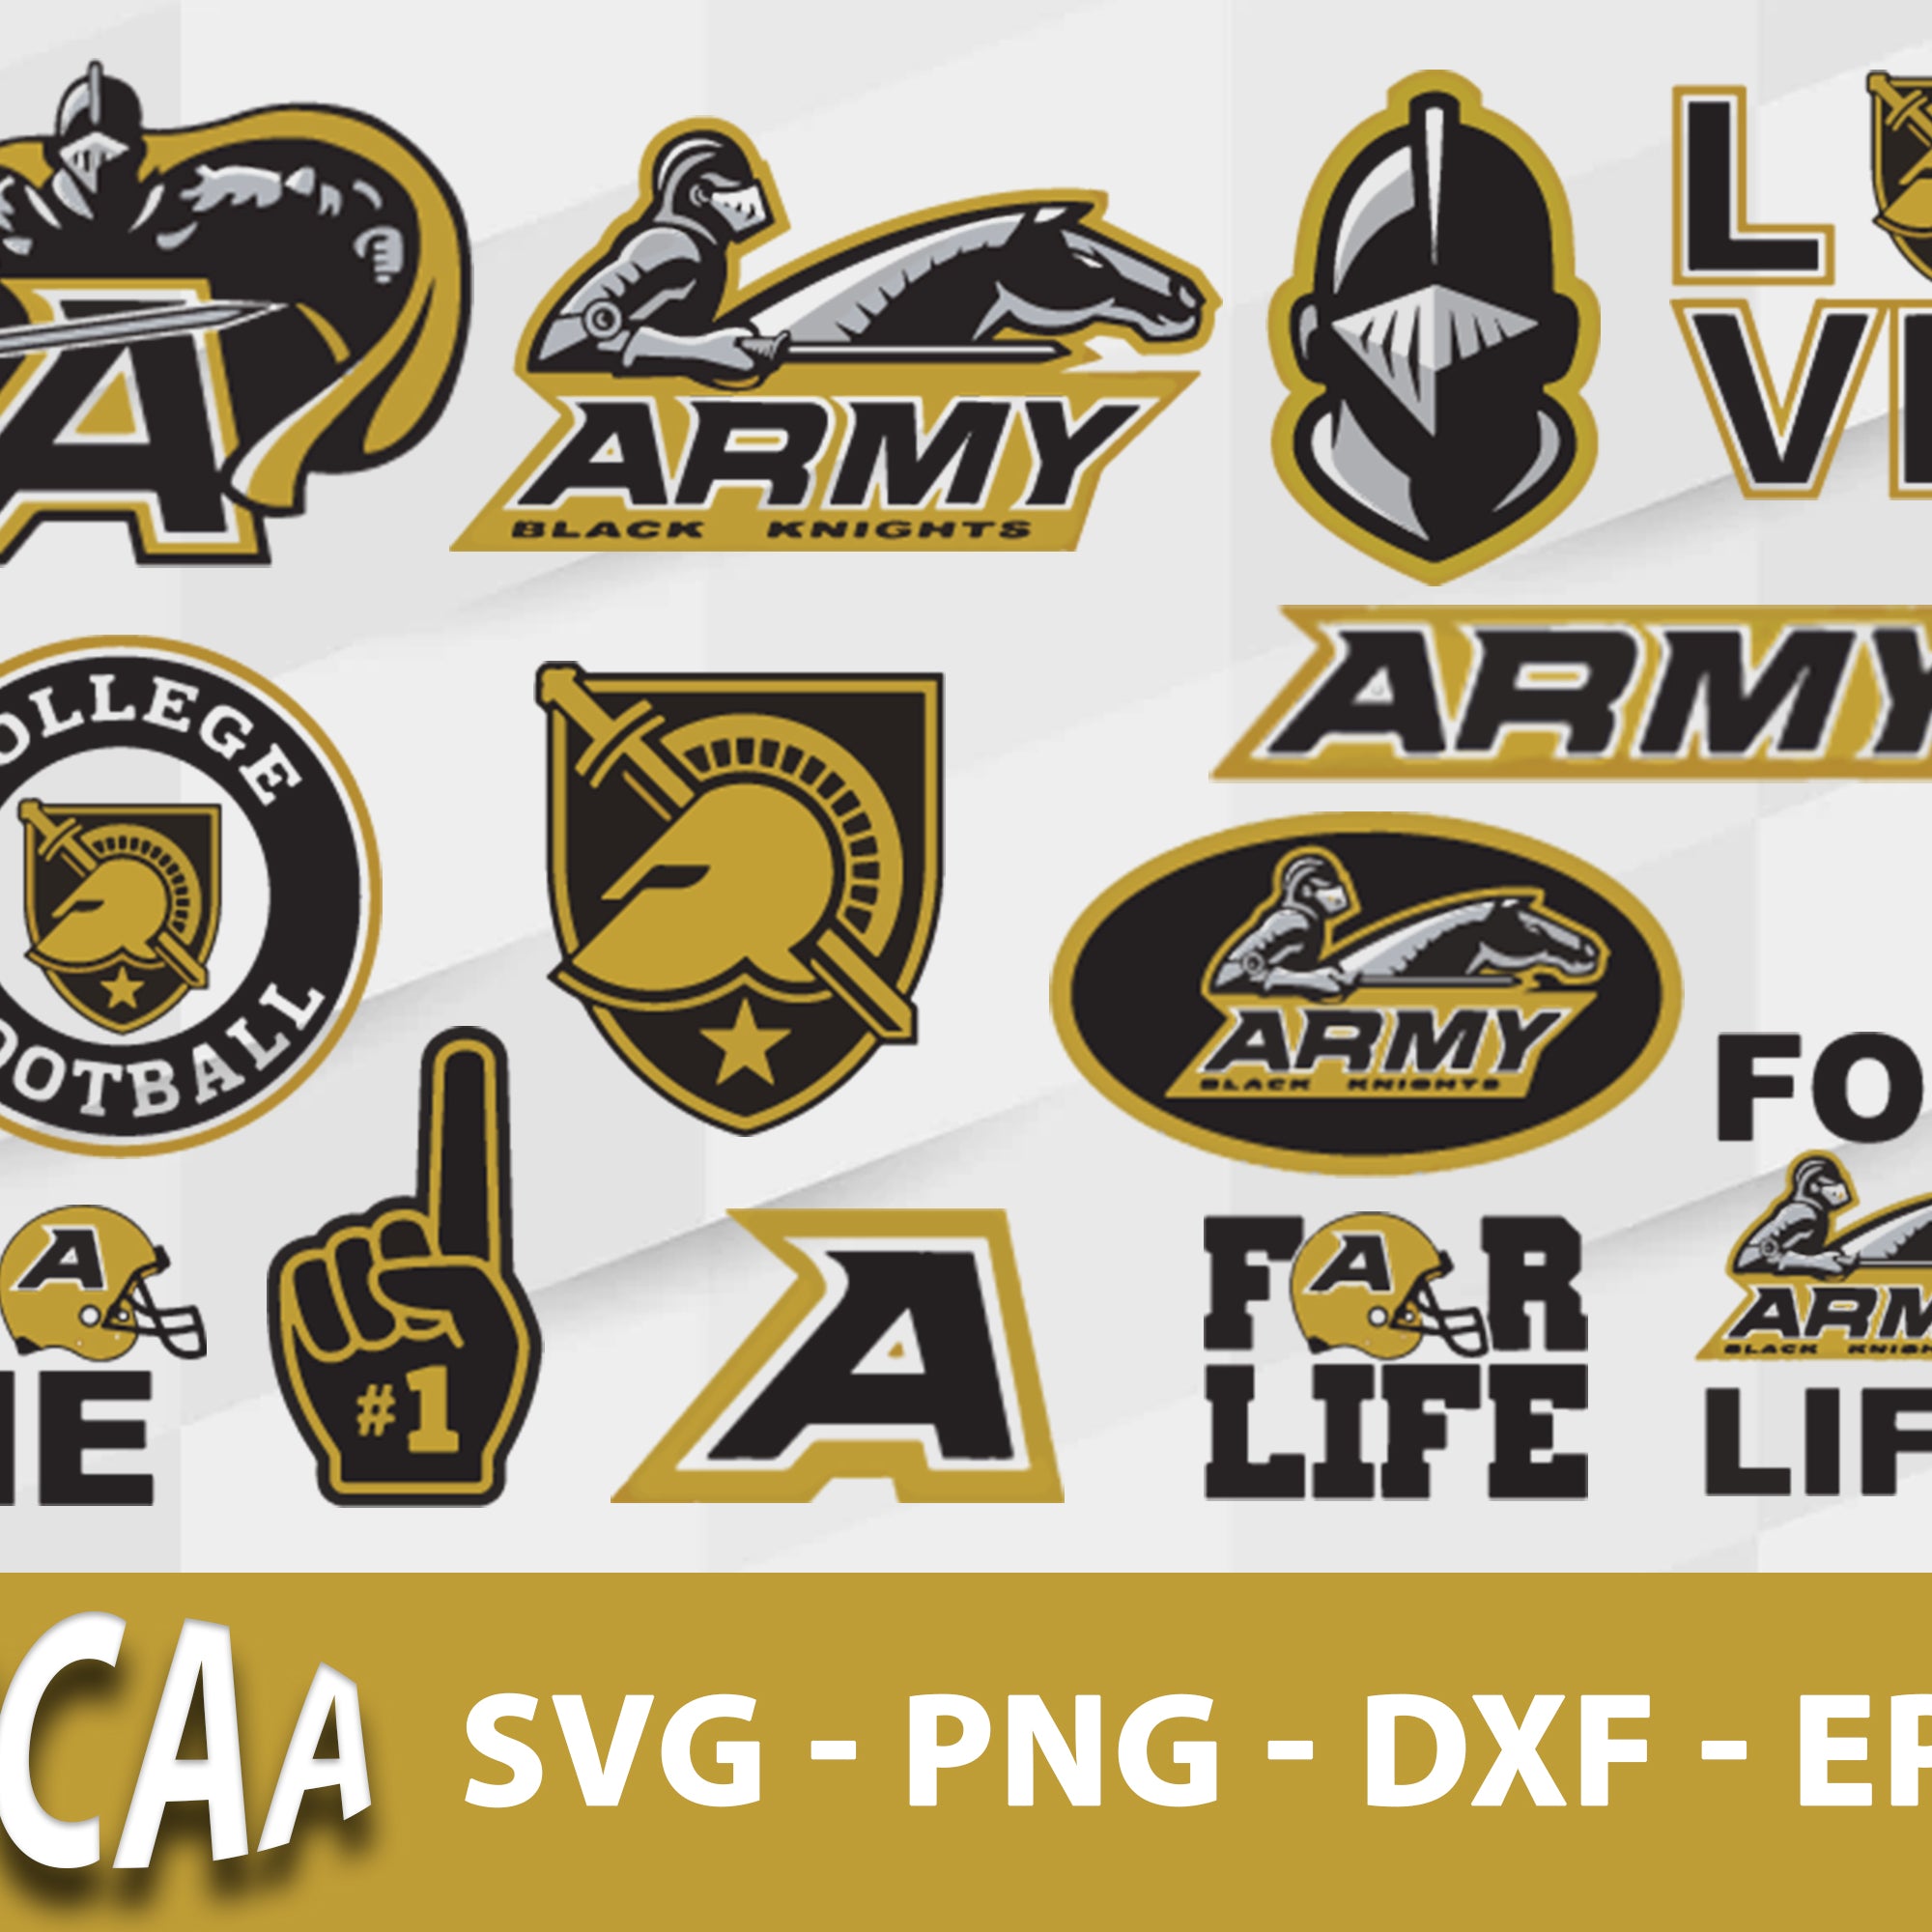 Army Black Knights Svg Bundle, Army Black Knights Svg, Sport Svg, Ncaa Svg, Png, Dxf, Eps Digital file.